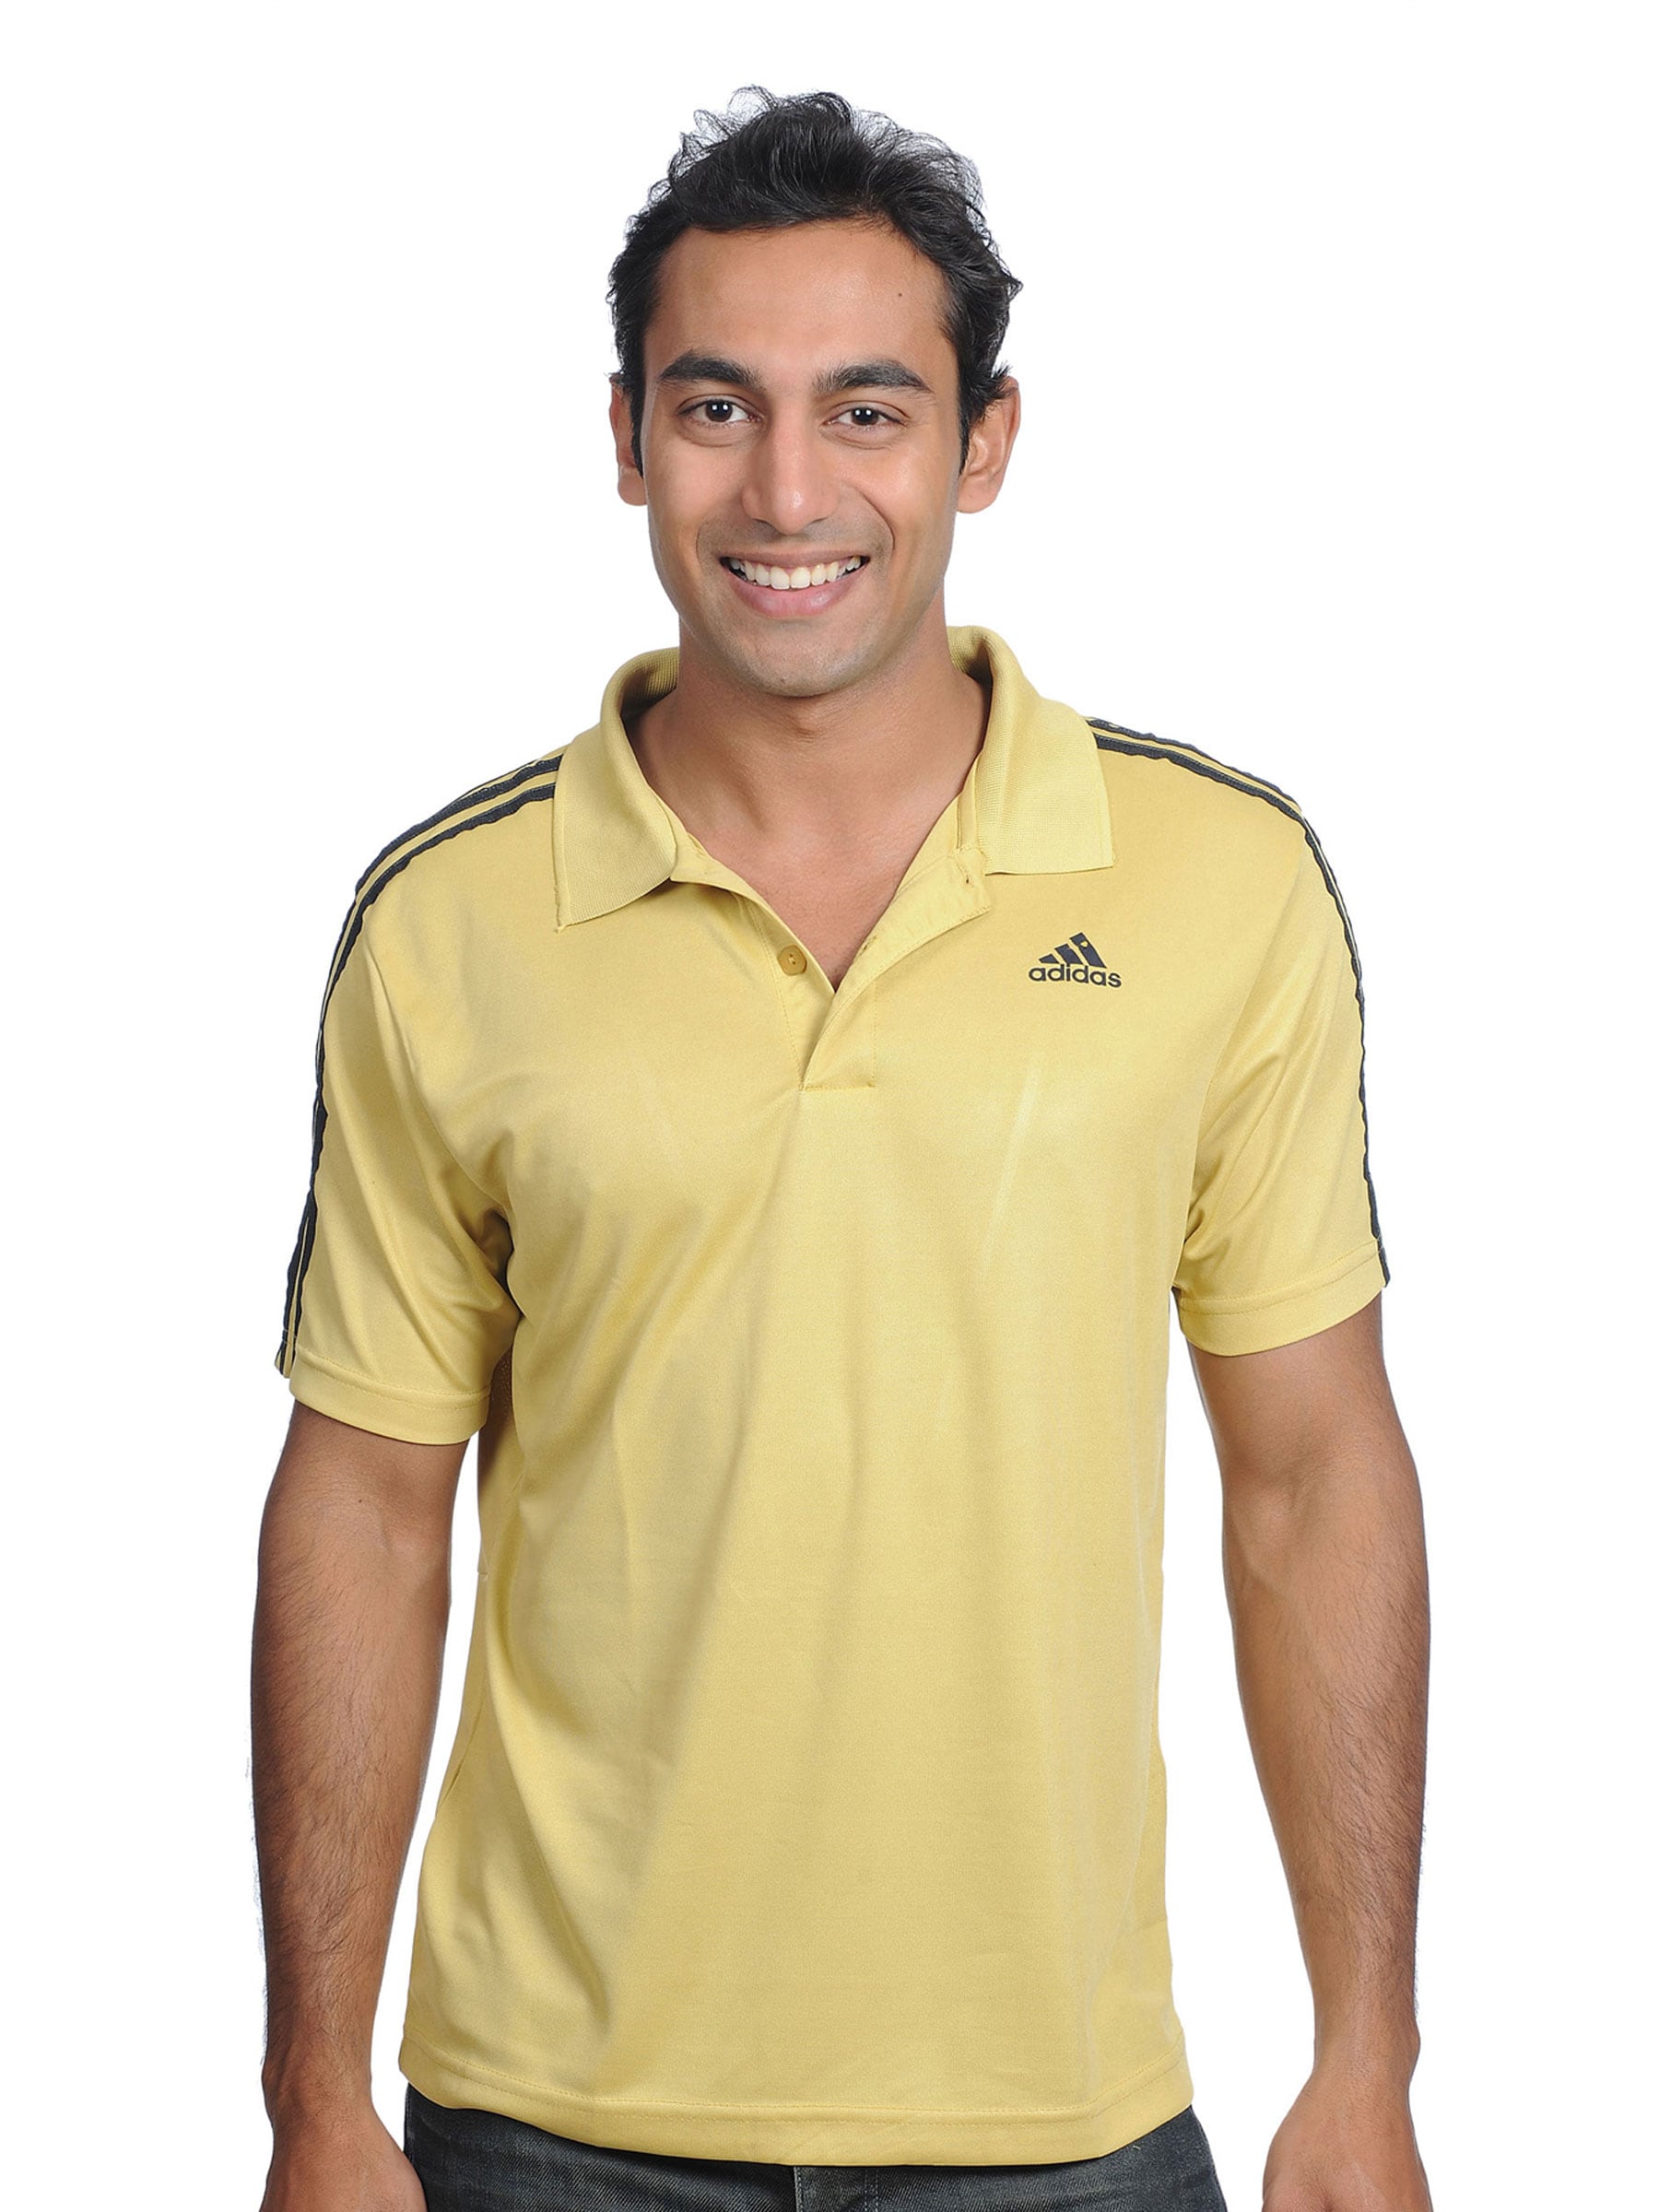 ADIDAS Men's Classic Yellow Polo T-shirt